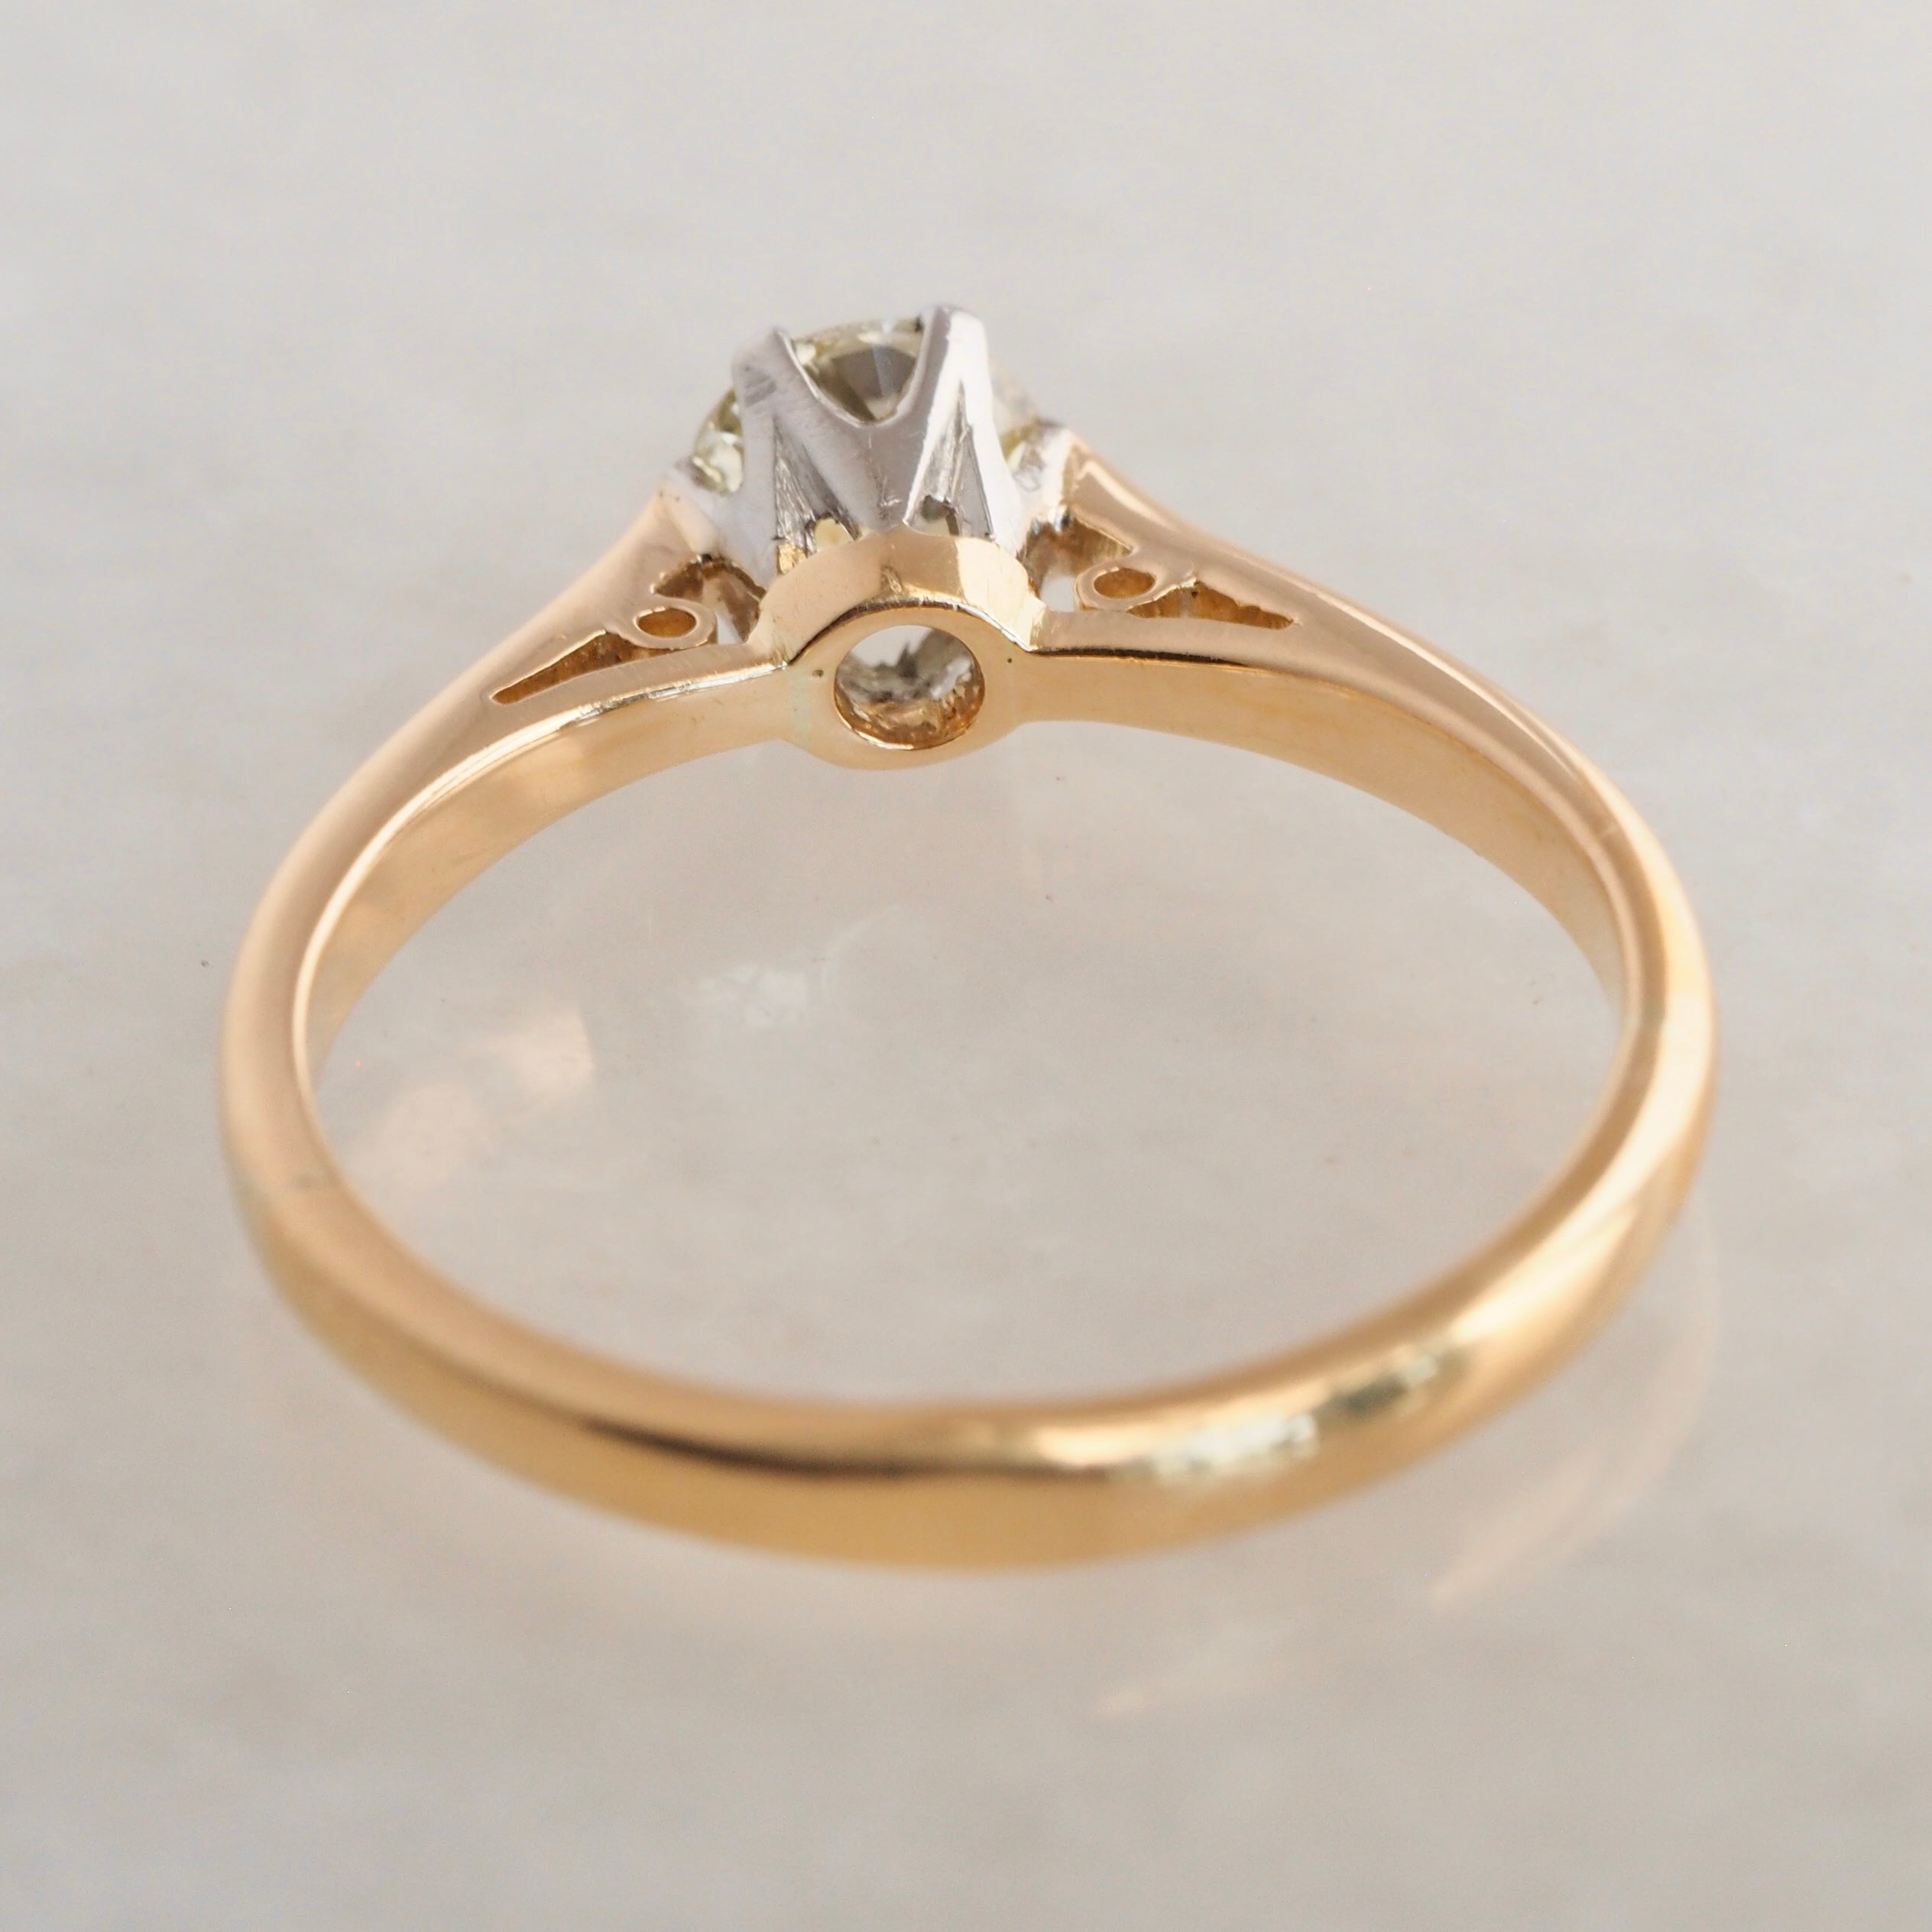 Antique Art Deco English 18k Gold Old Mine Cut Diamond Solitaire Ring